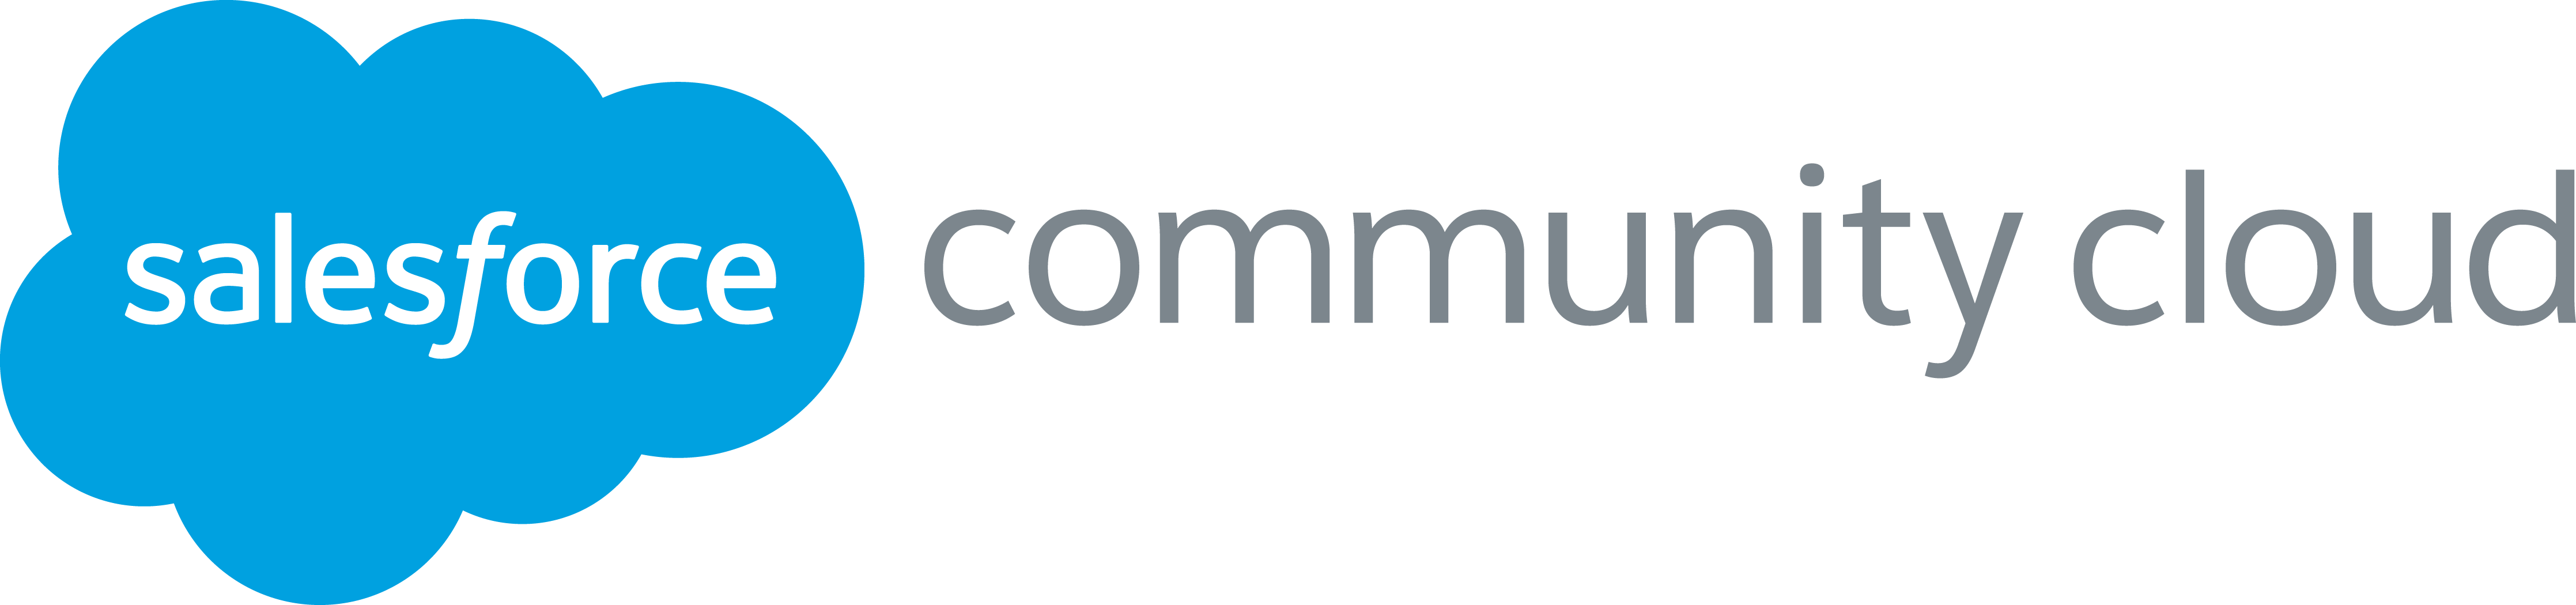 /s/2015sf_CommunityCloud_logo_RGB.png?v=1